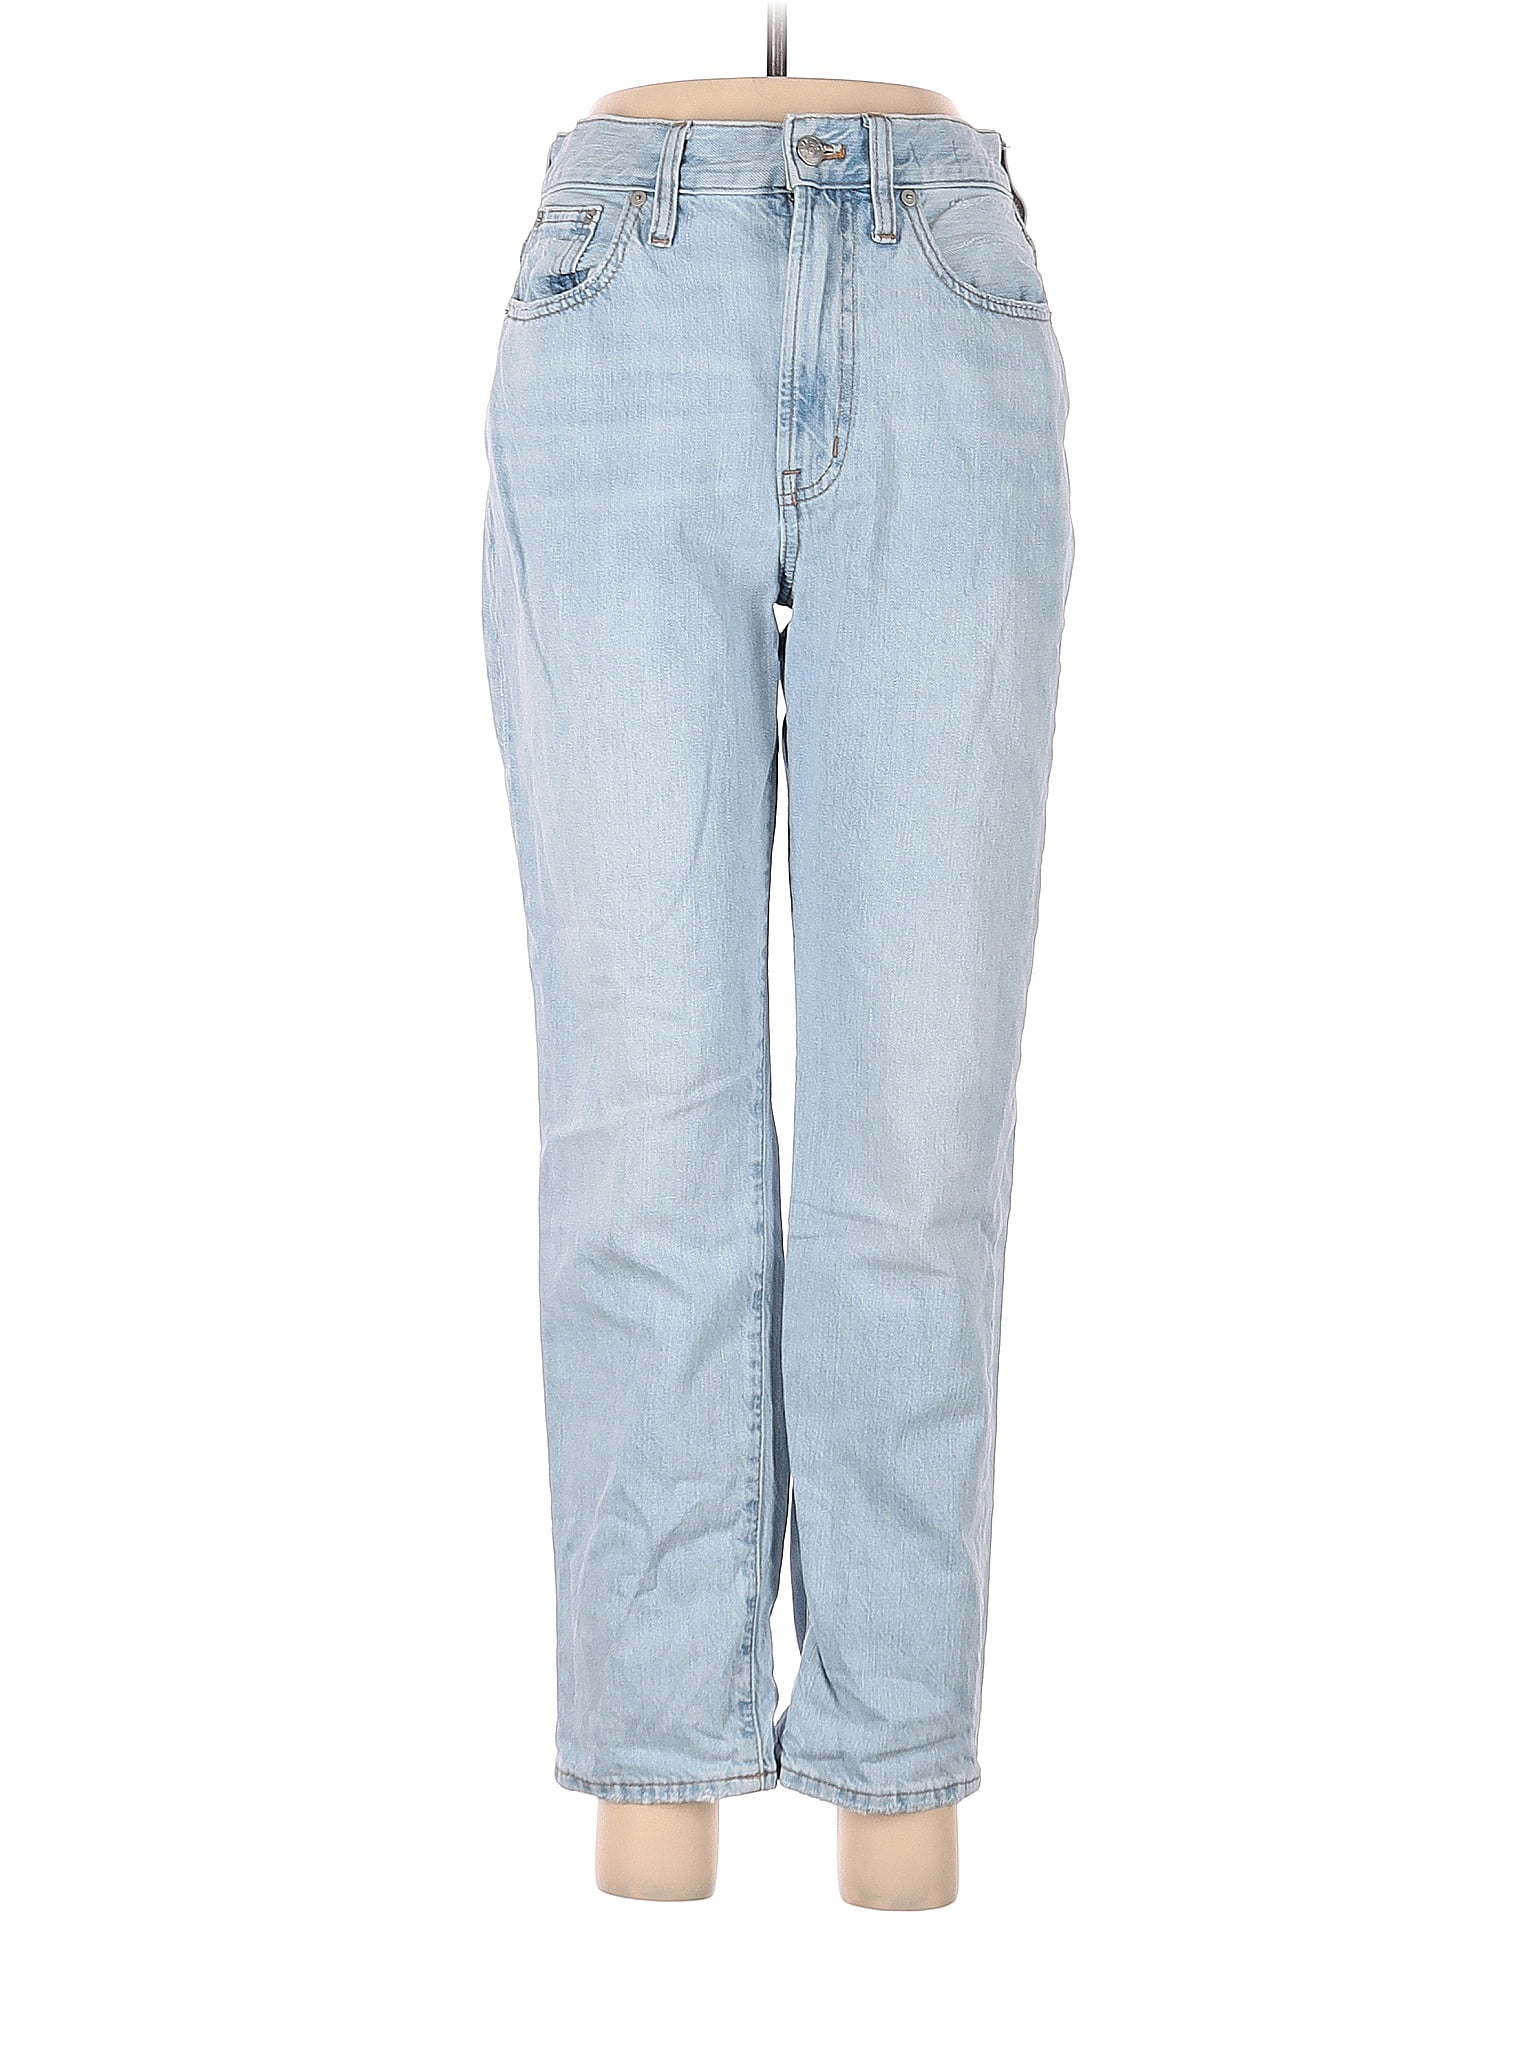 Madewell 100% Cotton Solid Blue Jeans 27 Waist - 67% off | thredUP